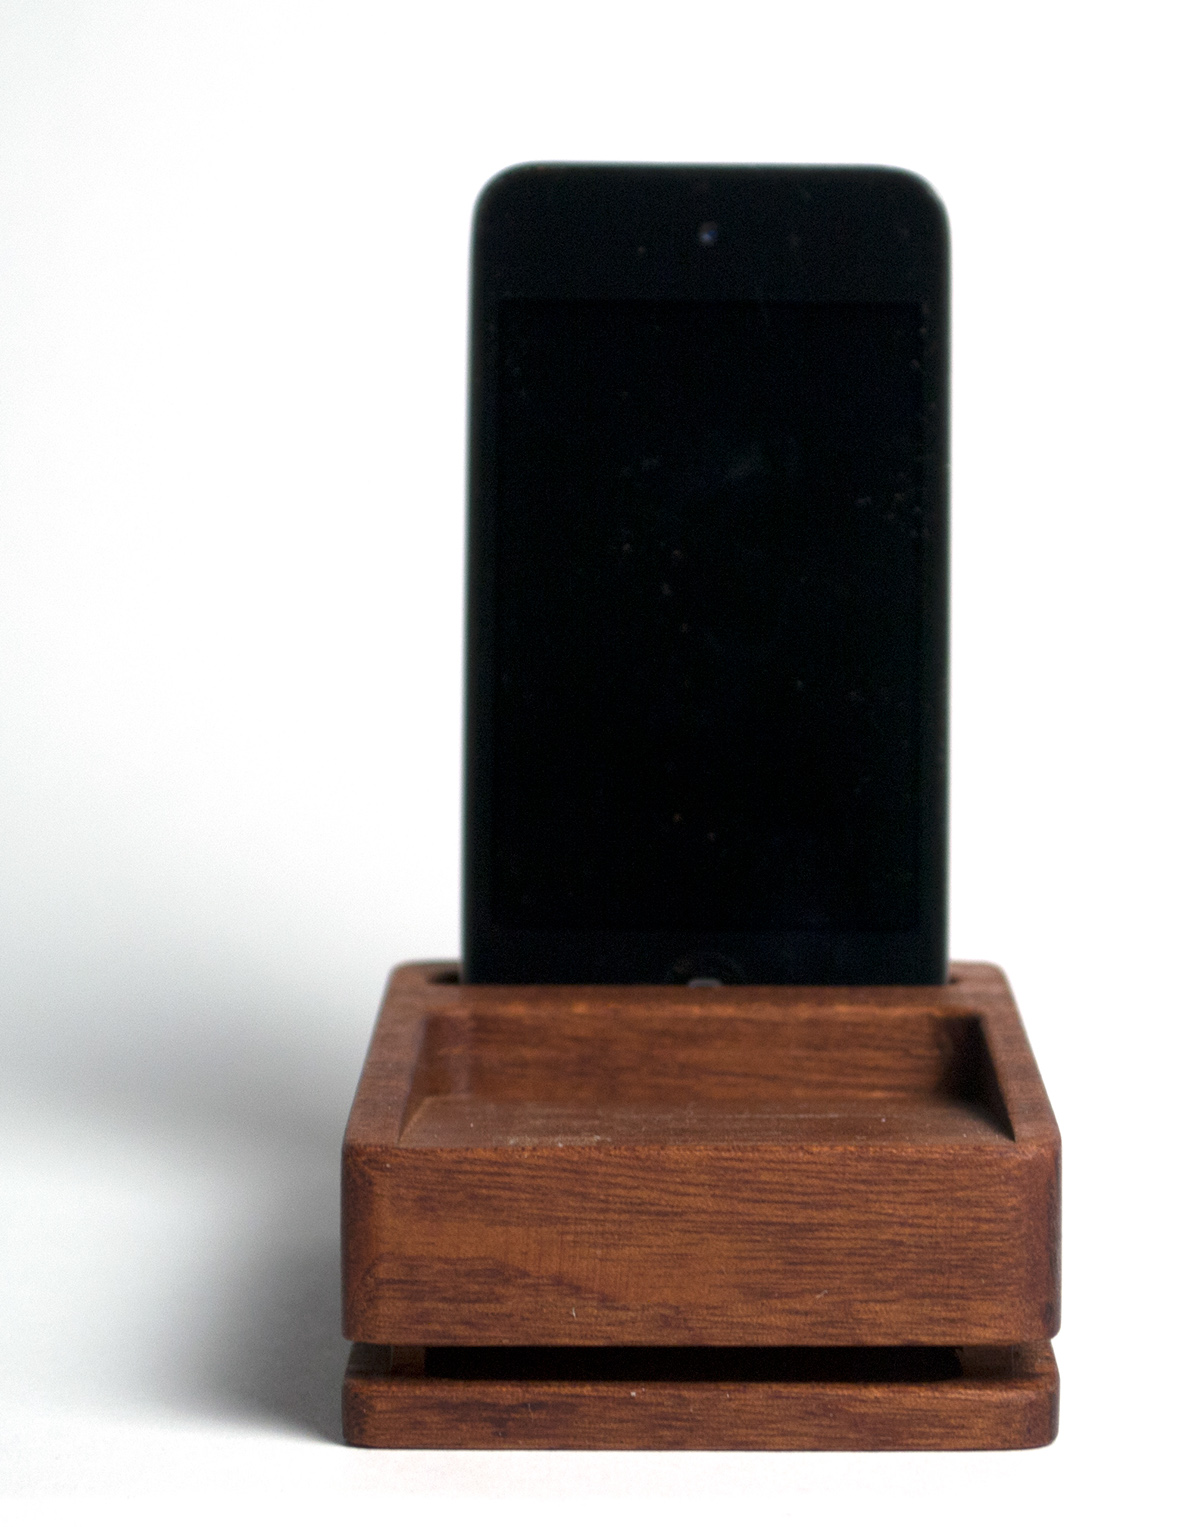 iphone dock passive speaker sapele ipod woodworking